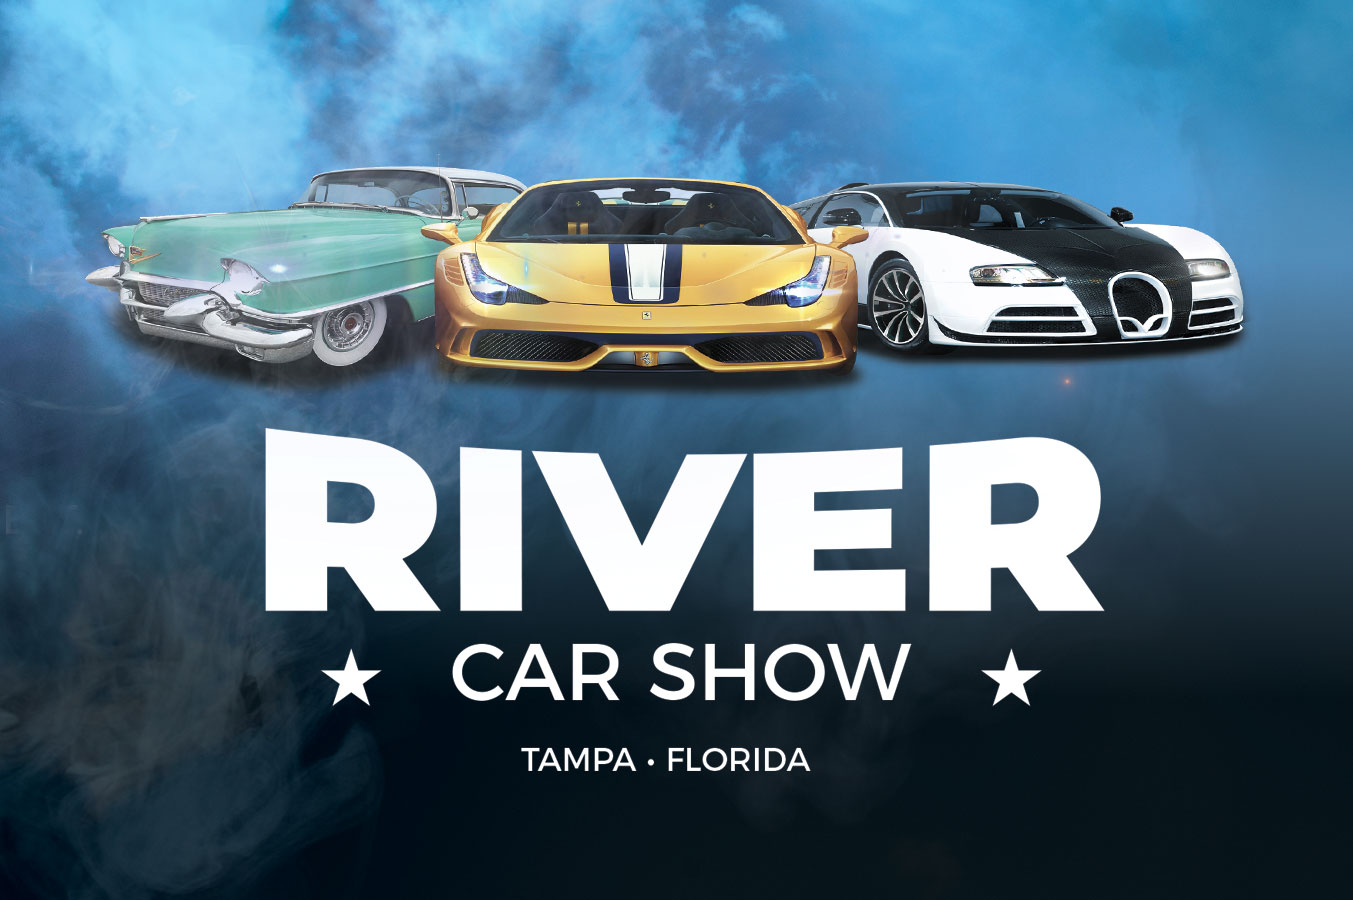 River Car Show